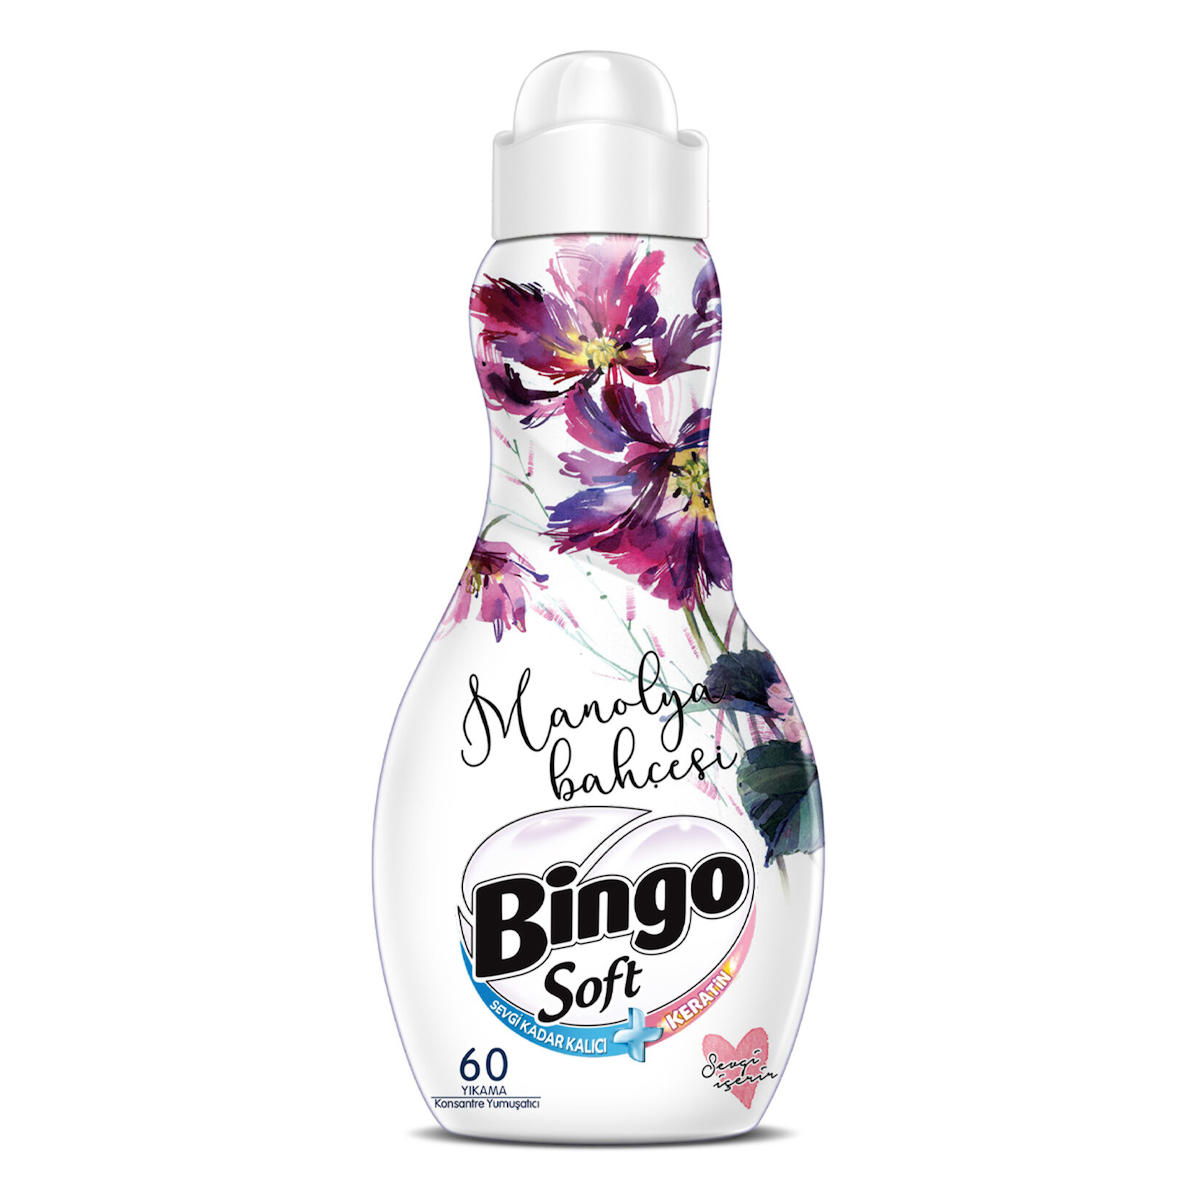 Bingo Soft Konsantre Manolya 60 Yıkama Yumuşatıcı 9 x 1.44 lt